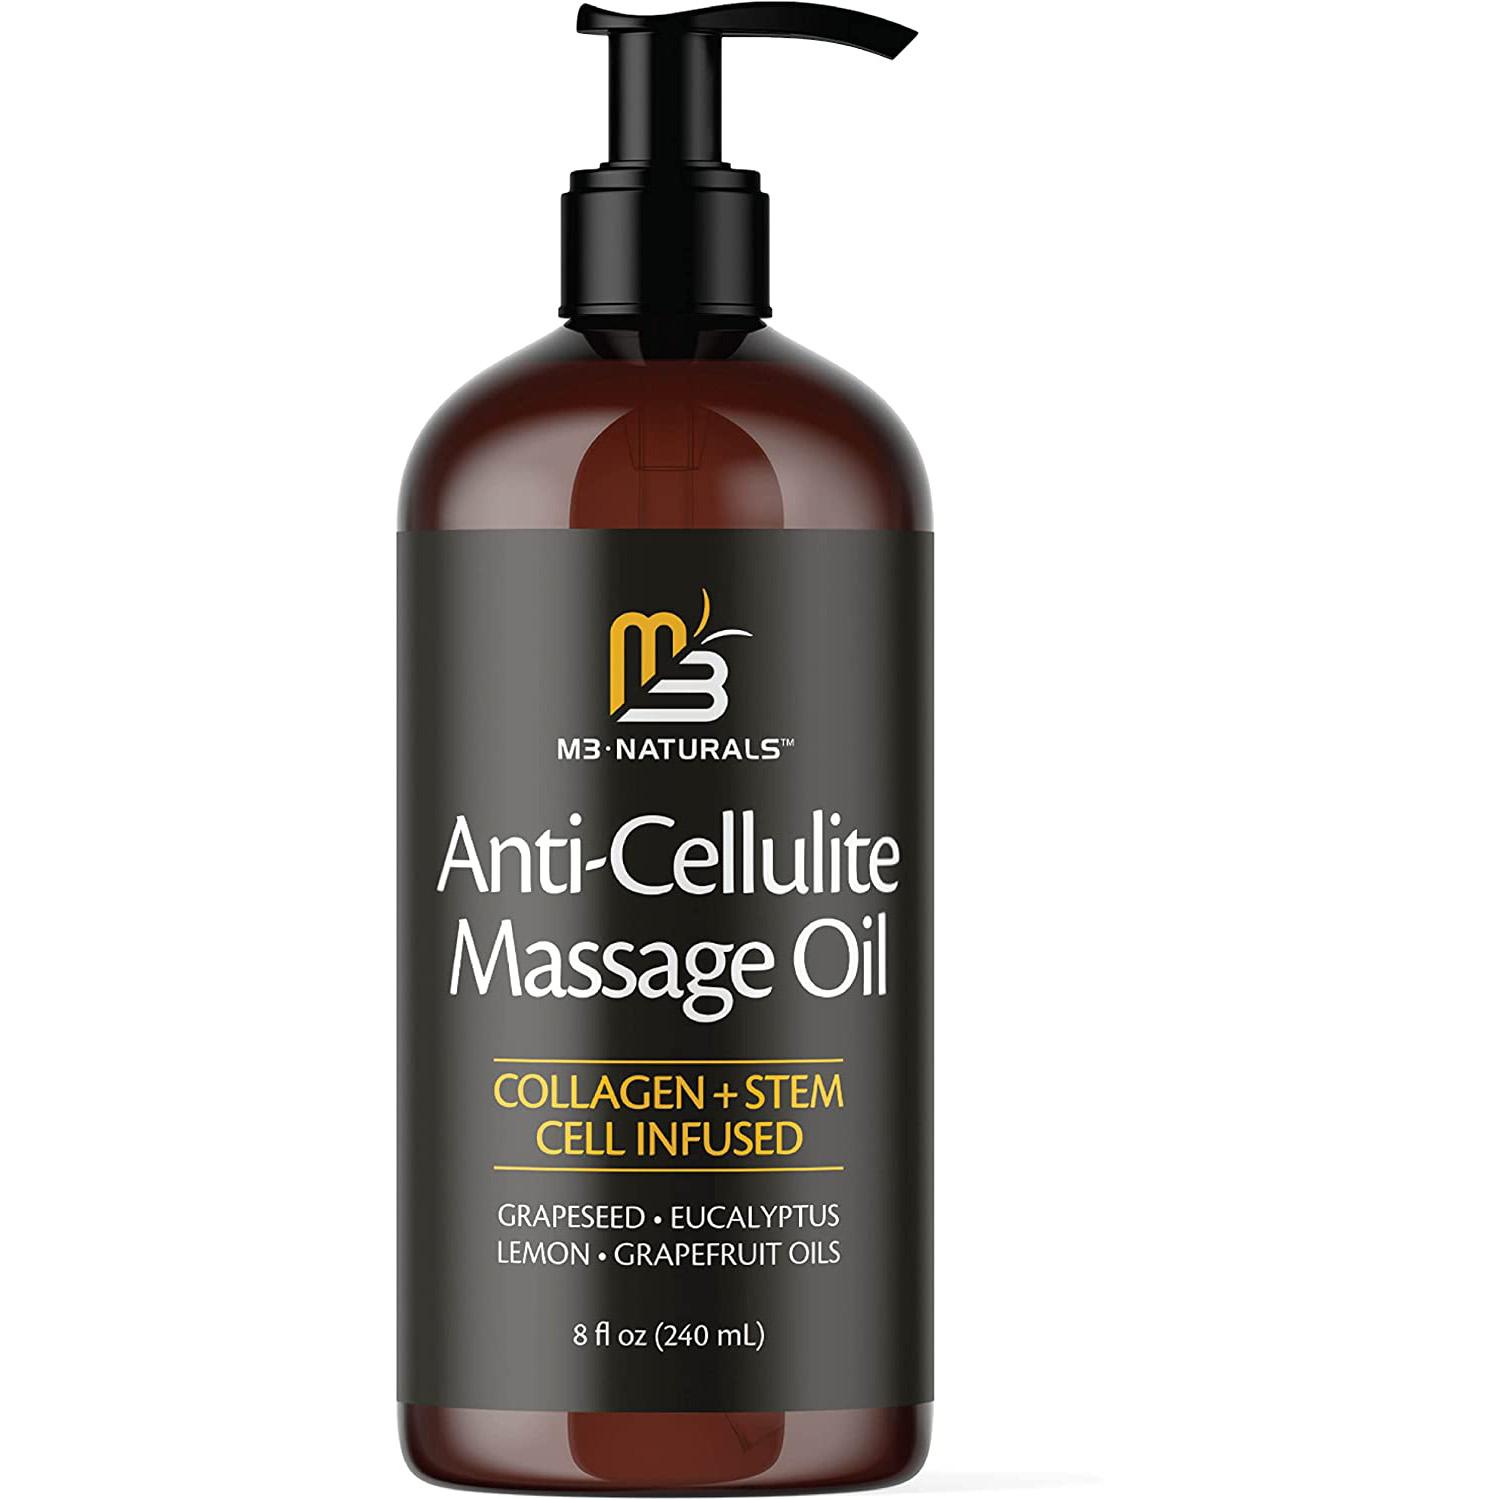 M3 Naturals Anti Cellulite Massage Oil for $9.92 Shipped